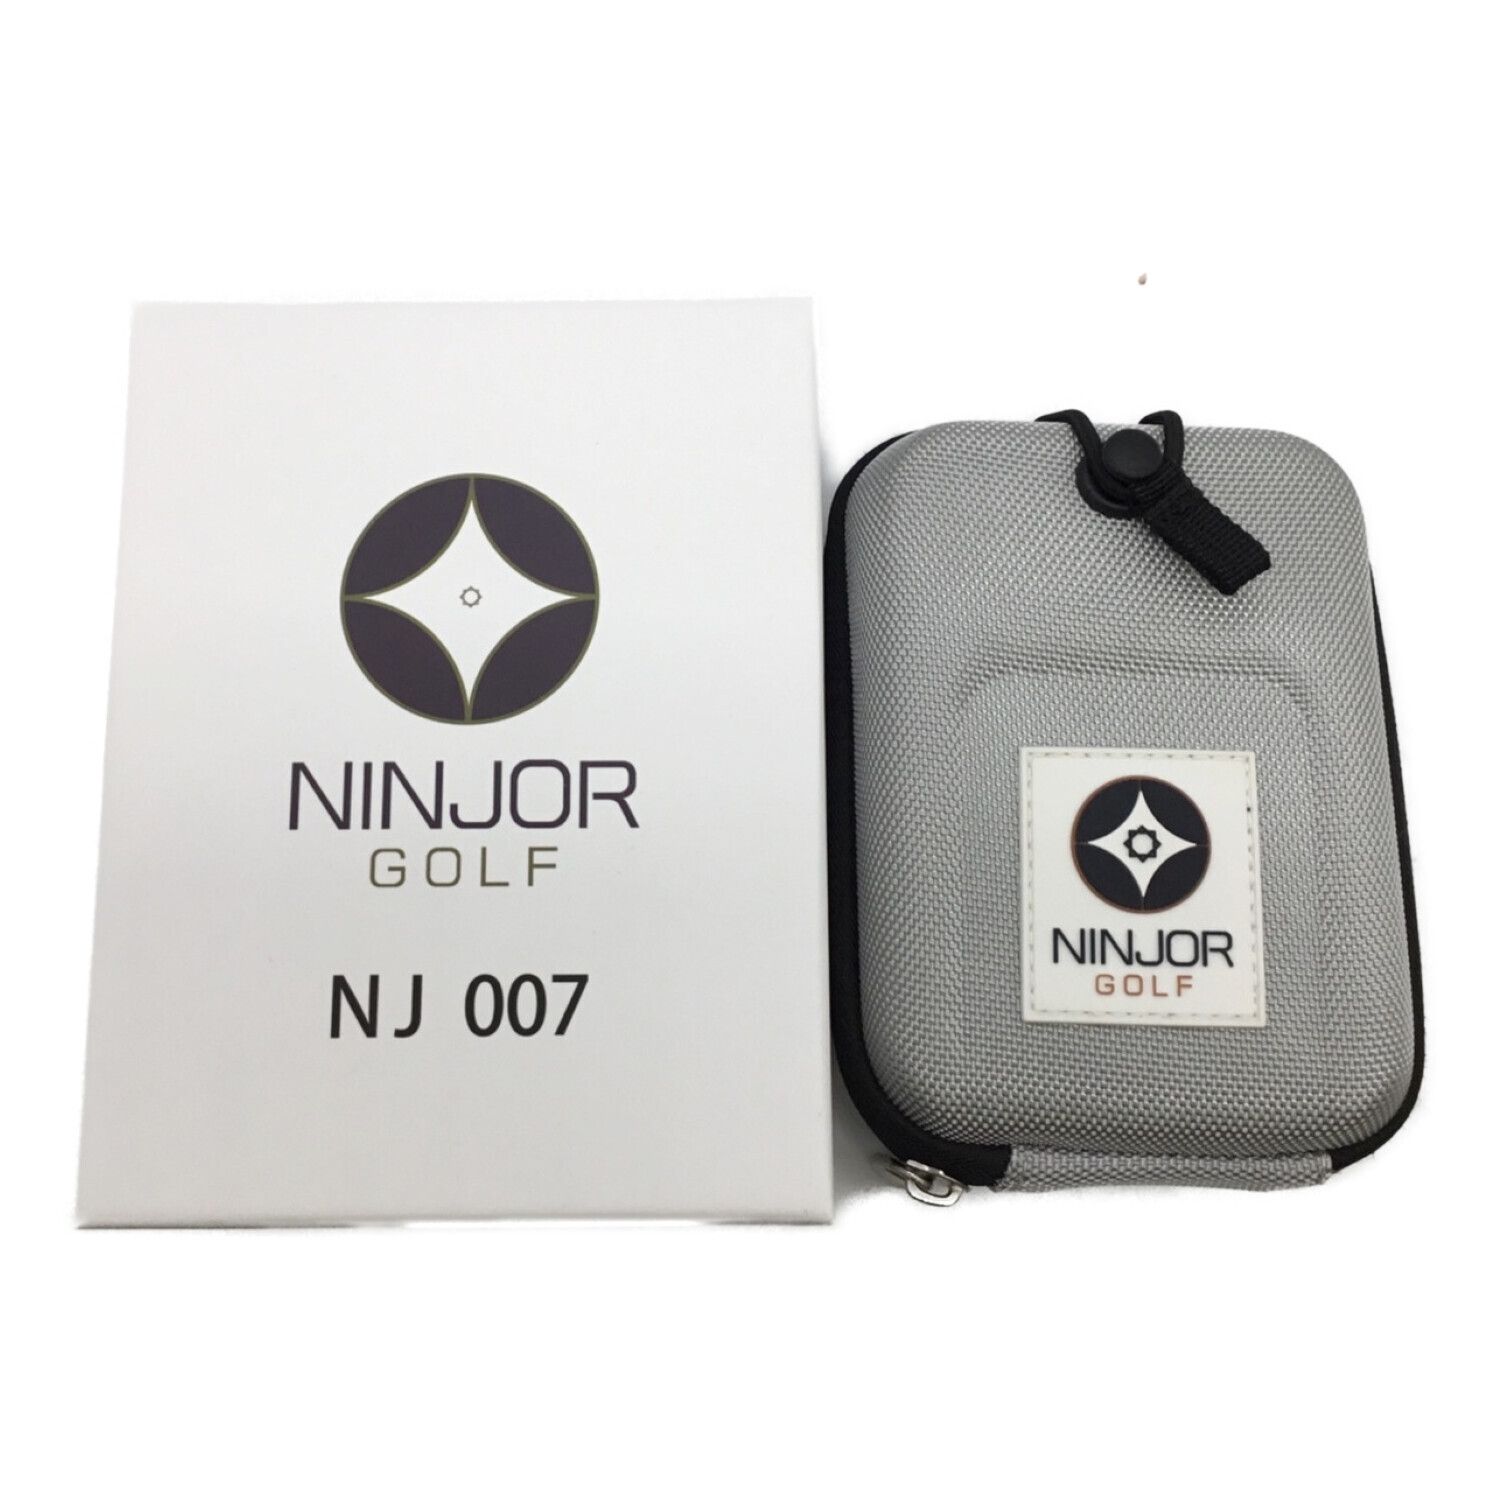 NINJOR GOLF(ニンジャーゴルフ）NJ007 - ラウンド用品・アクセサリー